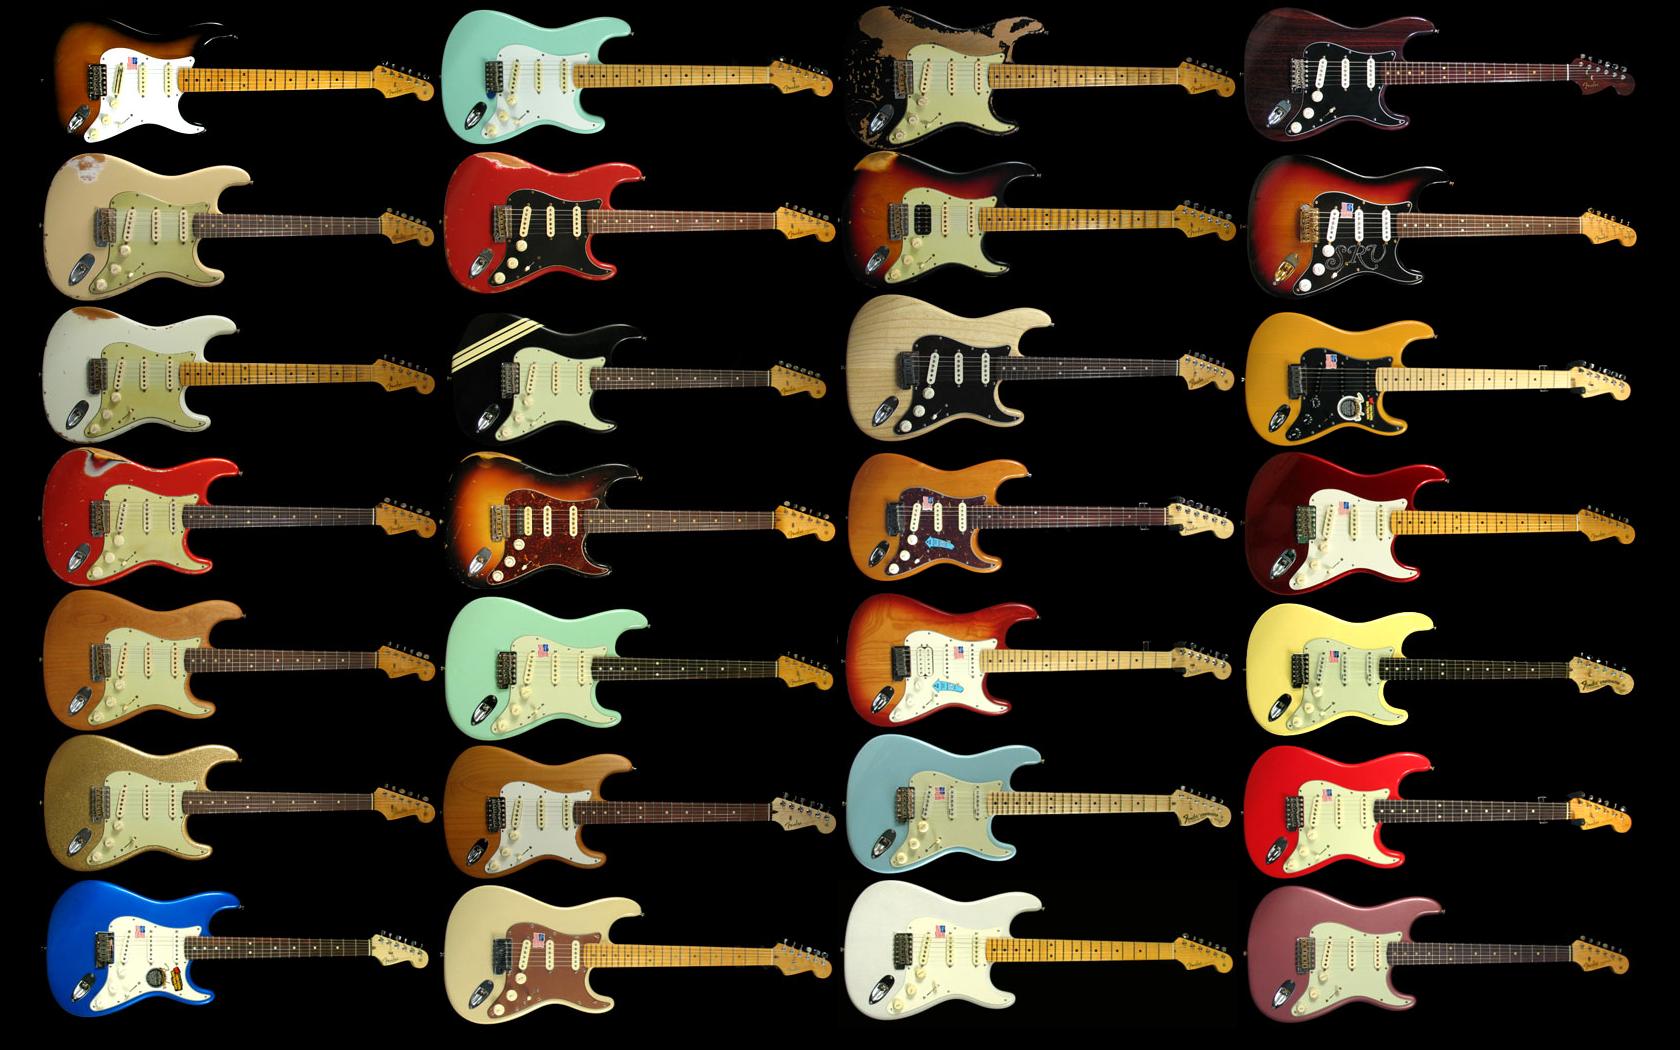 Guitar Fender Wallpaper 27004 Hd Wallpapers in Music   Imagescicom